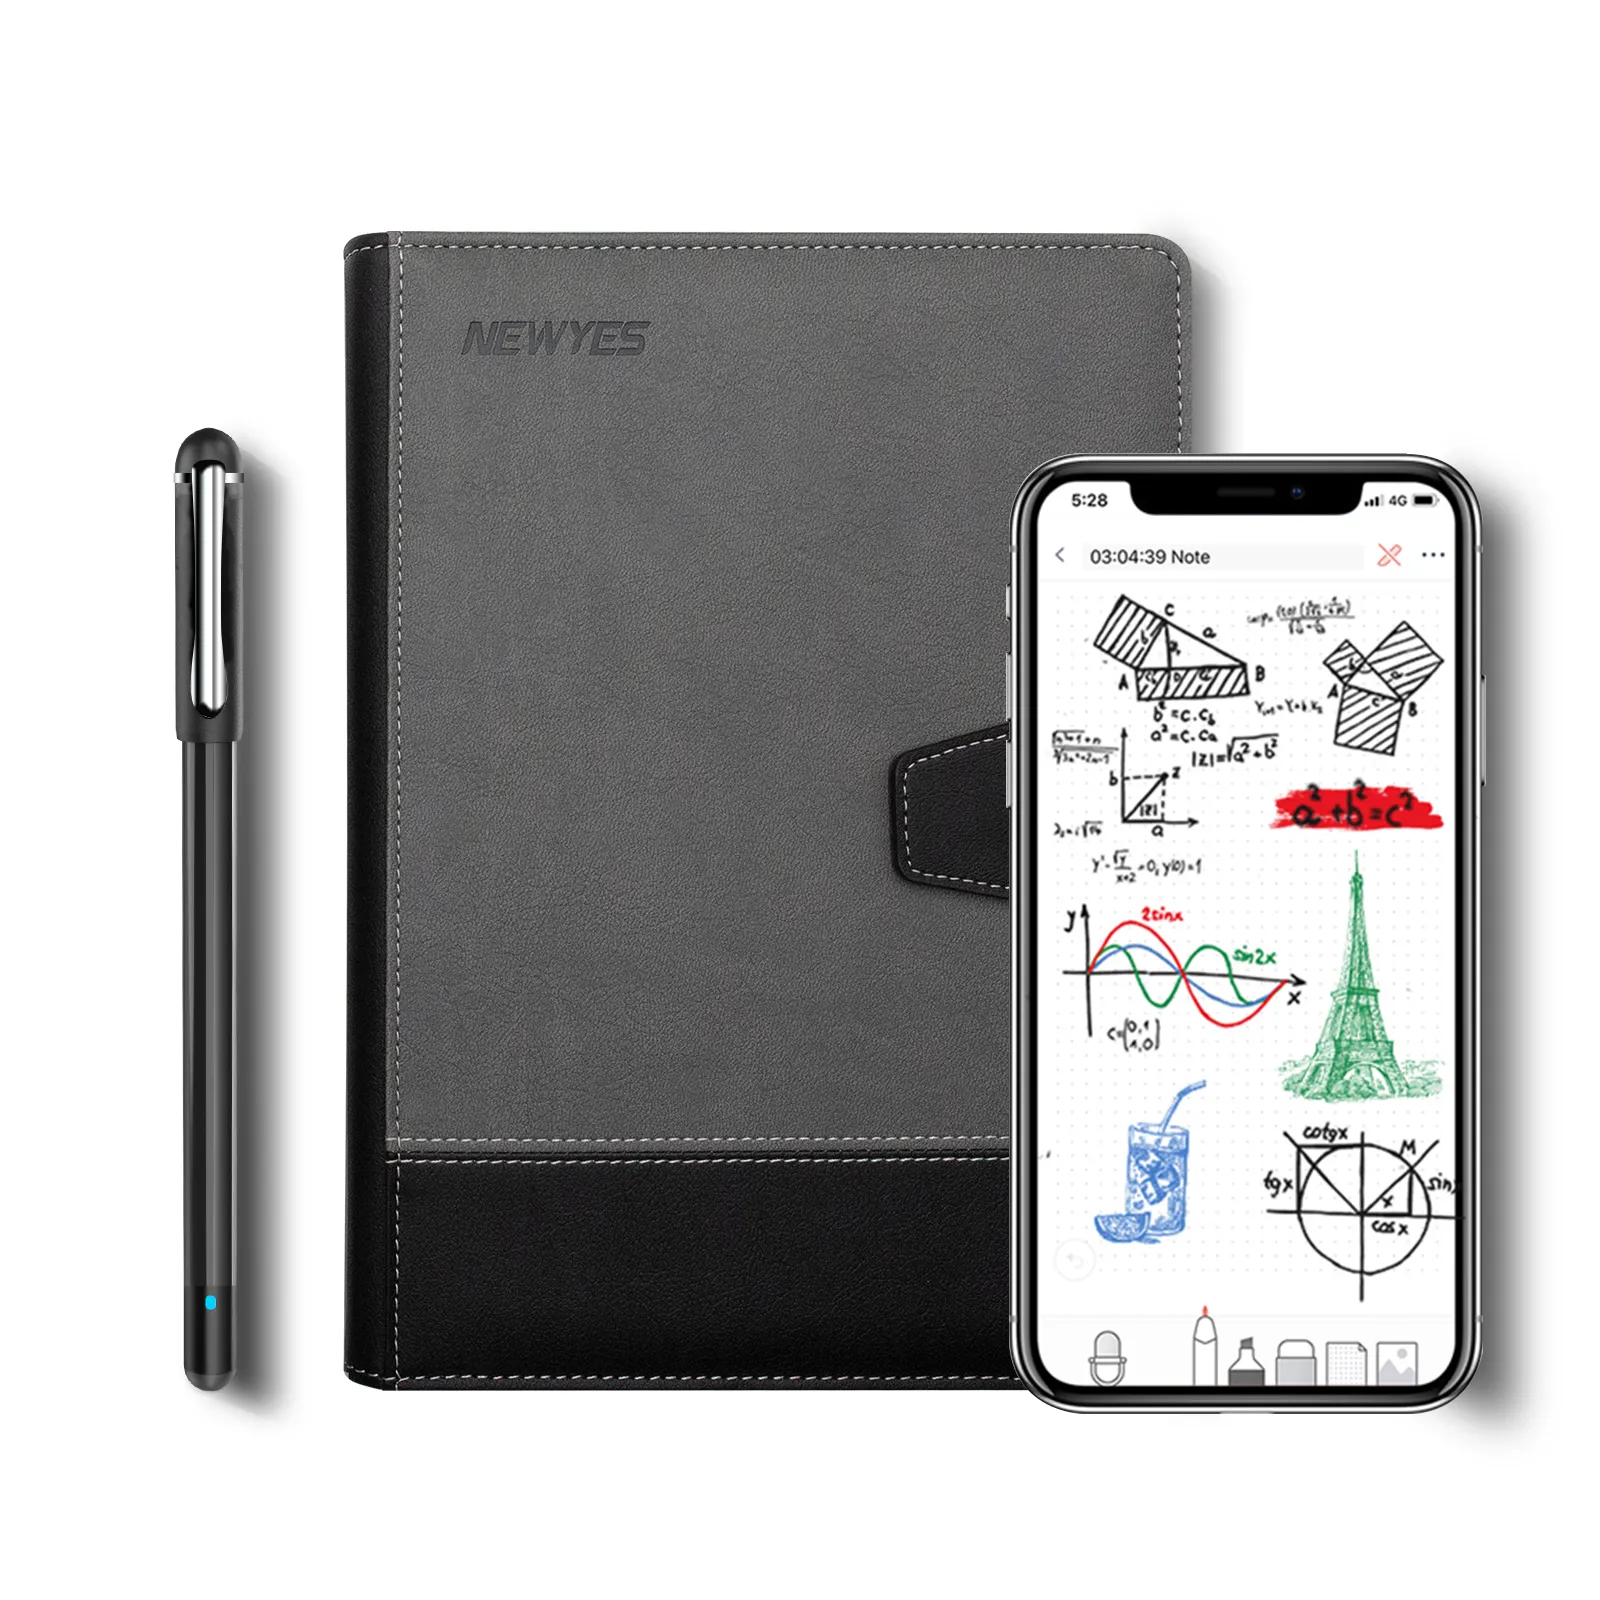 Newyes Digital Note Book Smart Writing Set Handschrift erkennung Smart Pen und Notebook mit App